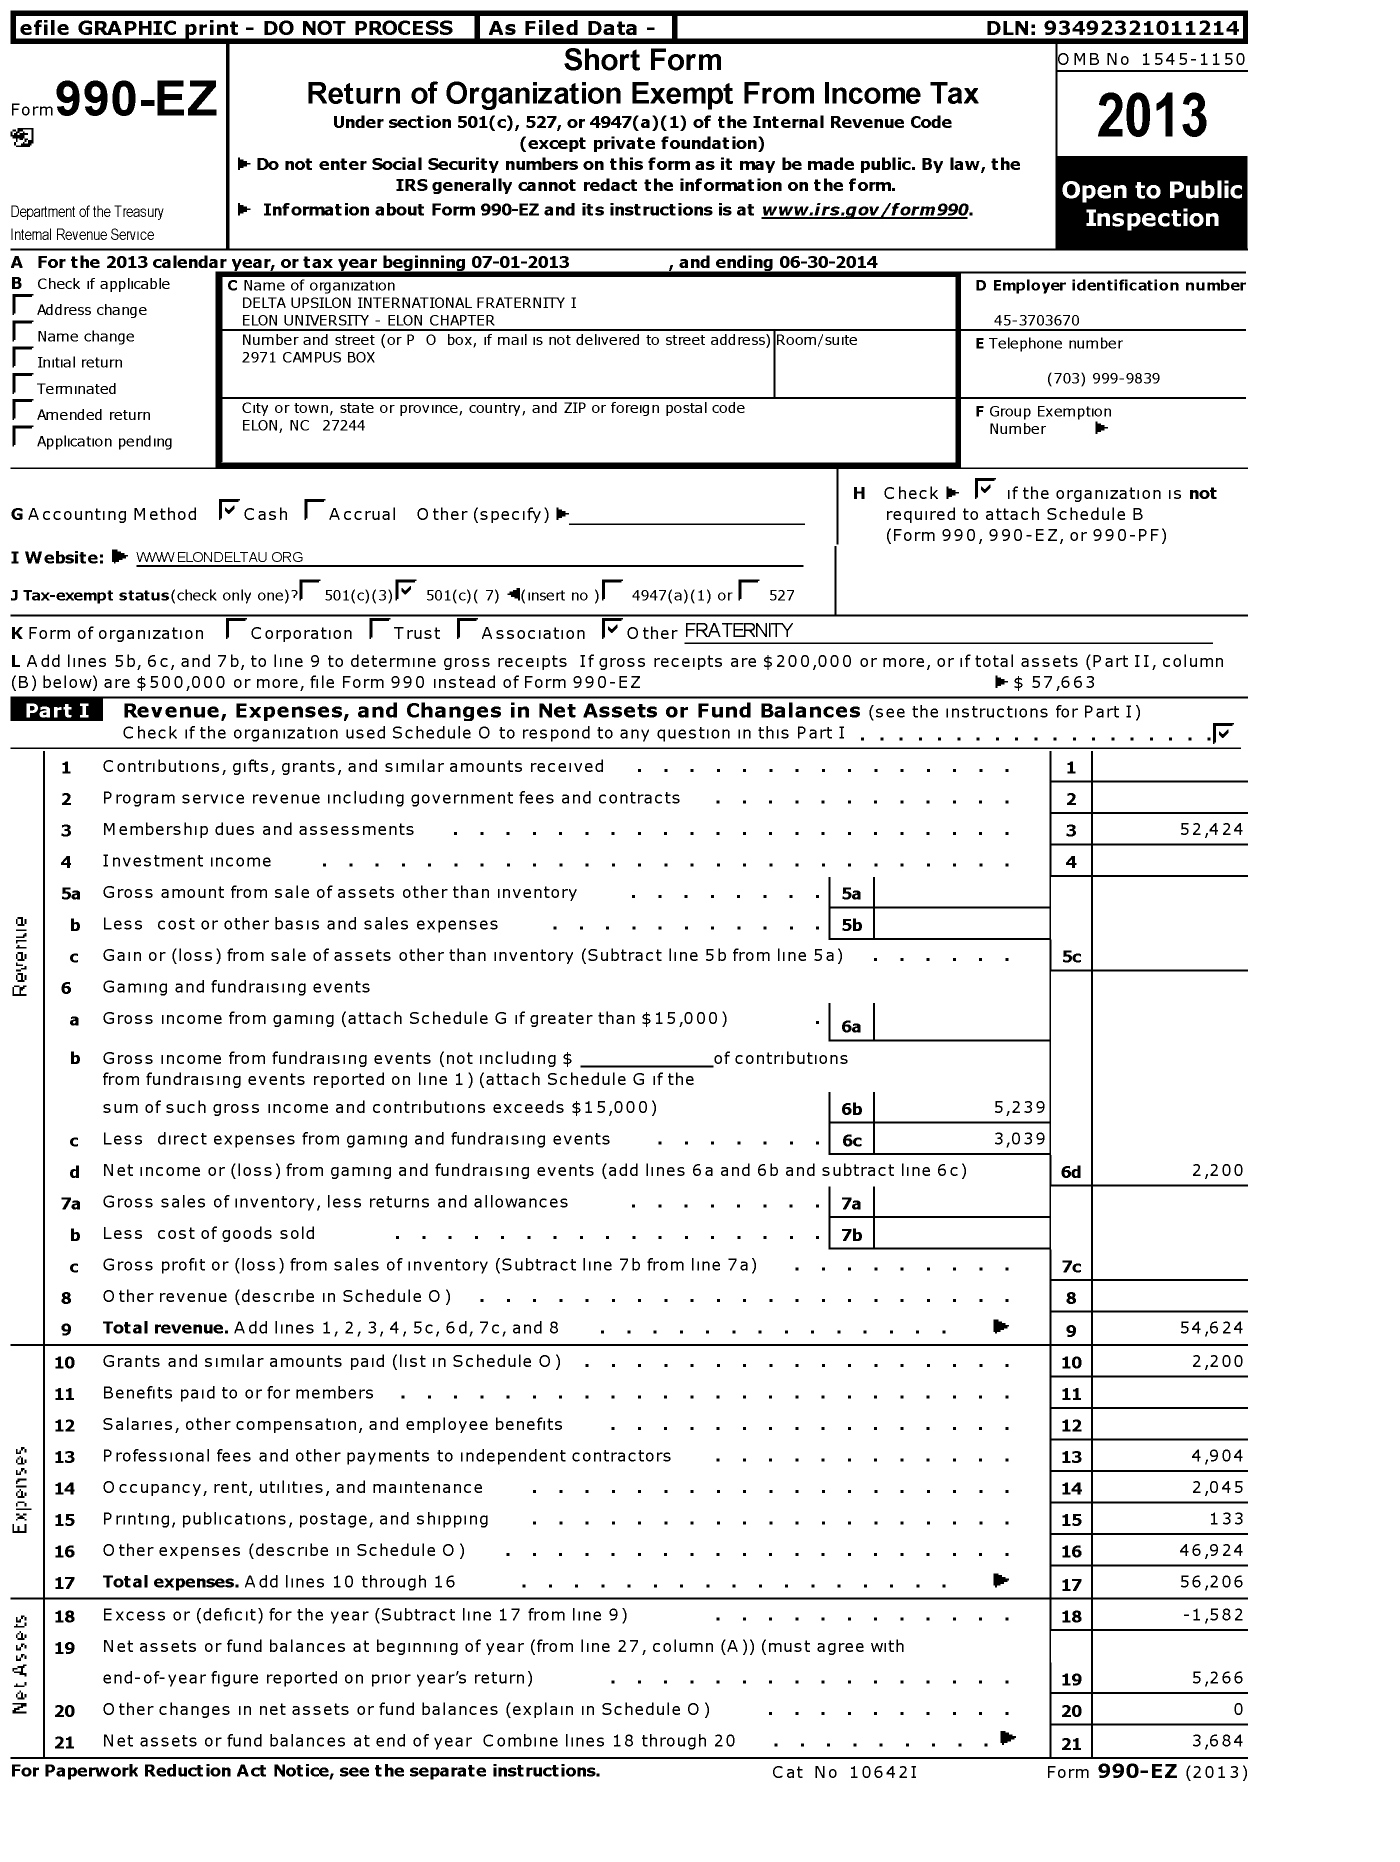 Image of first page of 2013 Form 990EO for Delta Upsilon Fraternity - Elon Delta Upsilon